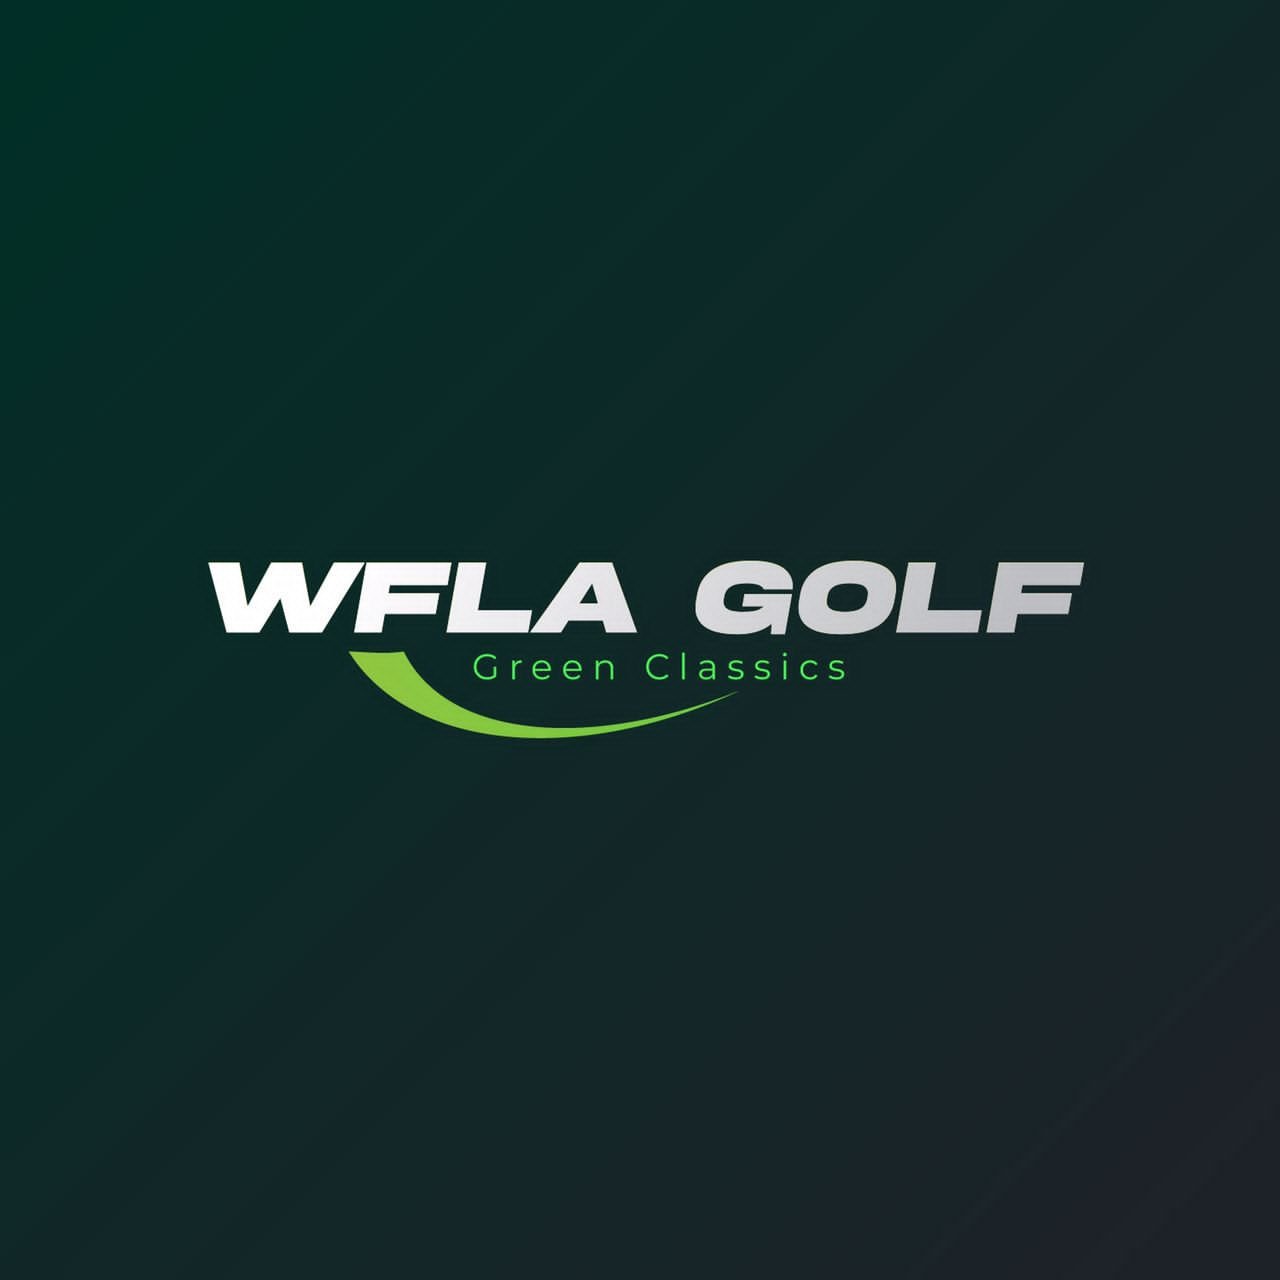 WFLA Golf tournament unveils logo